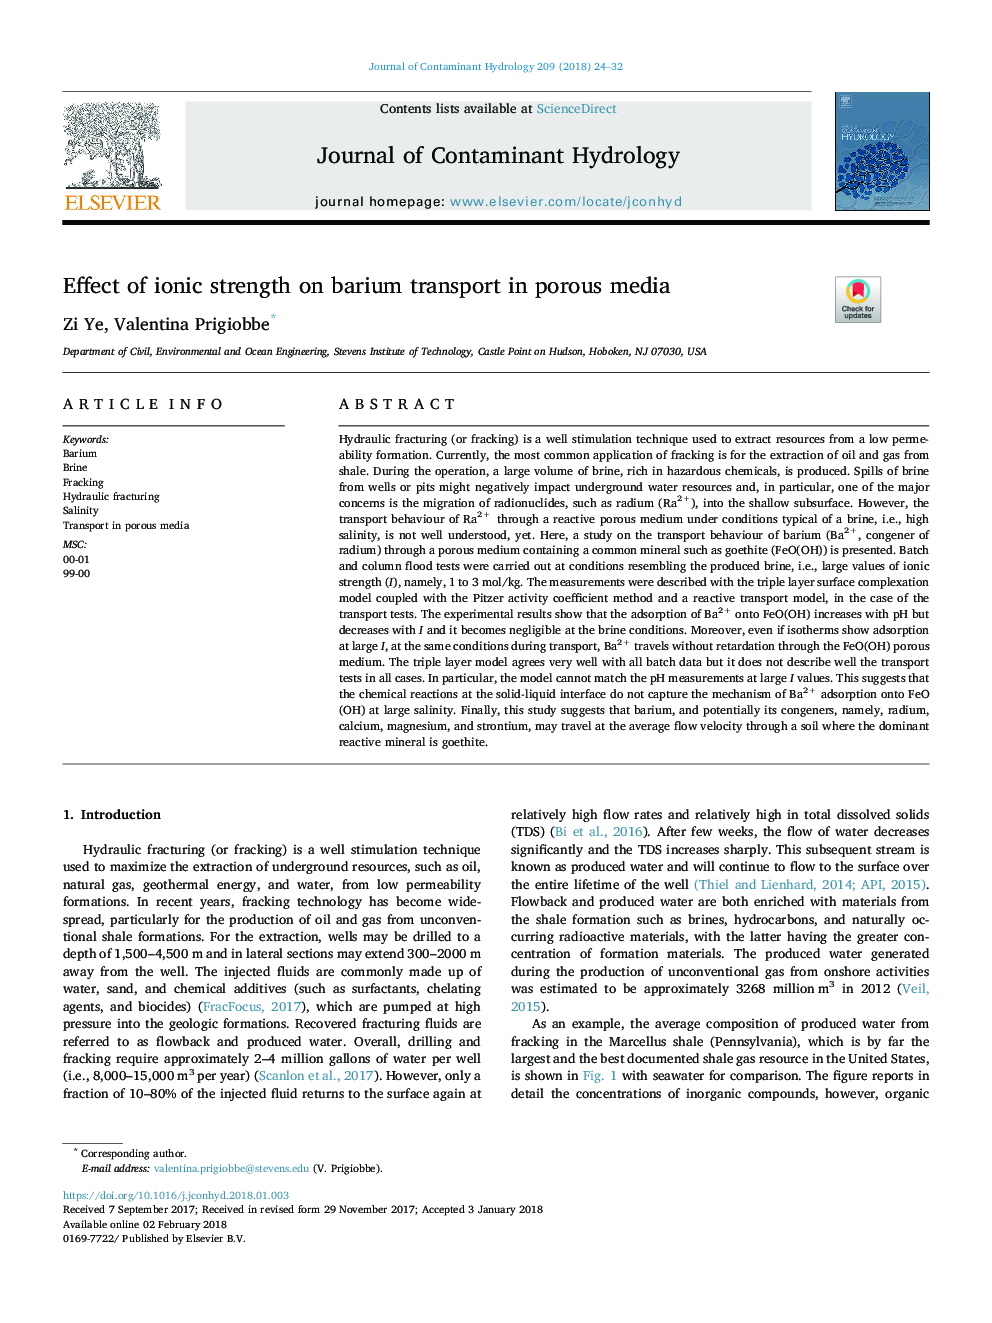 Effect of ionic strength on barium transport in porous media